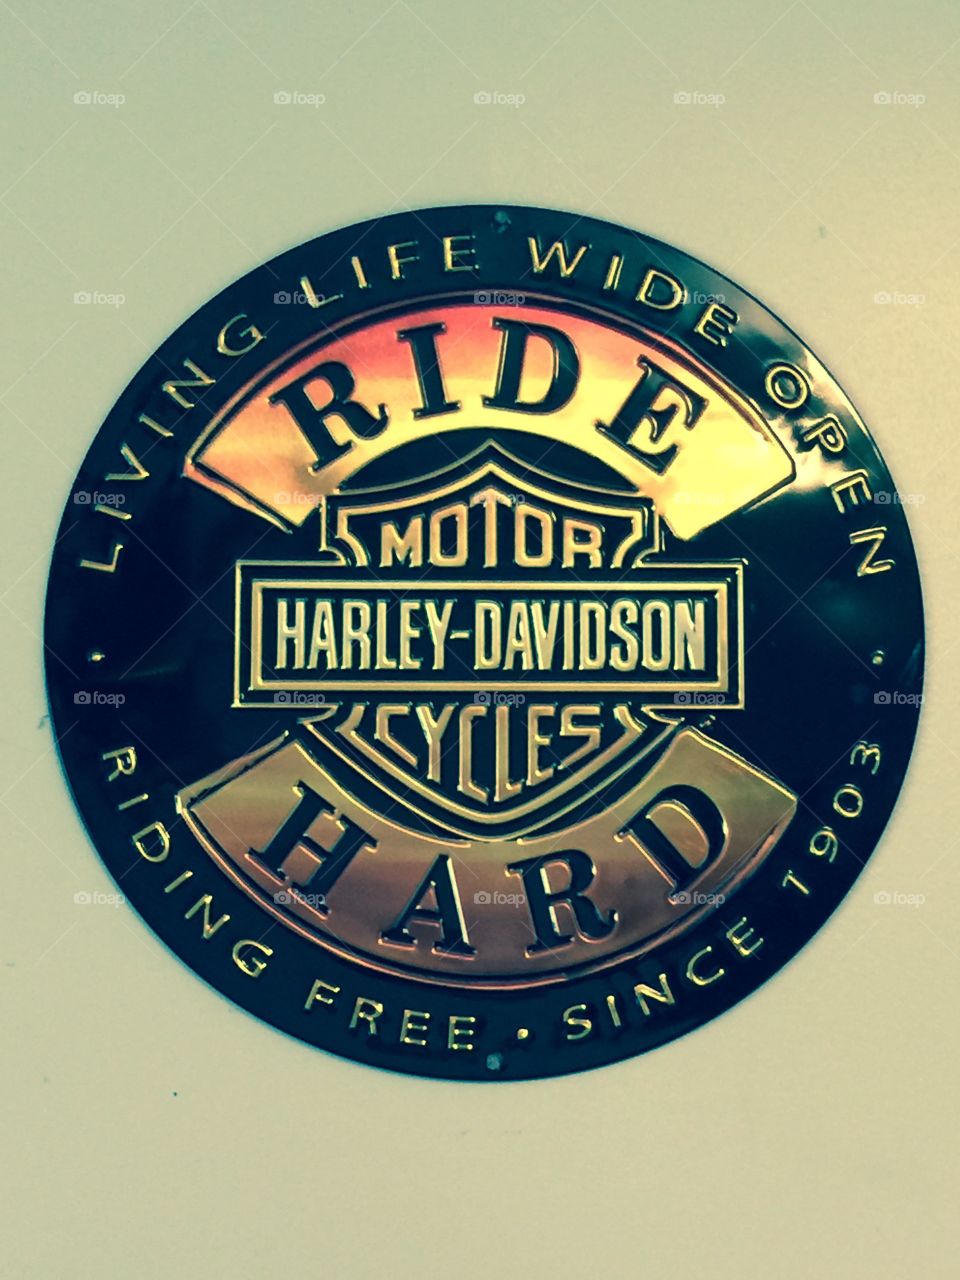 Love for Harley. Harley Davidson